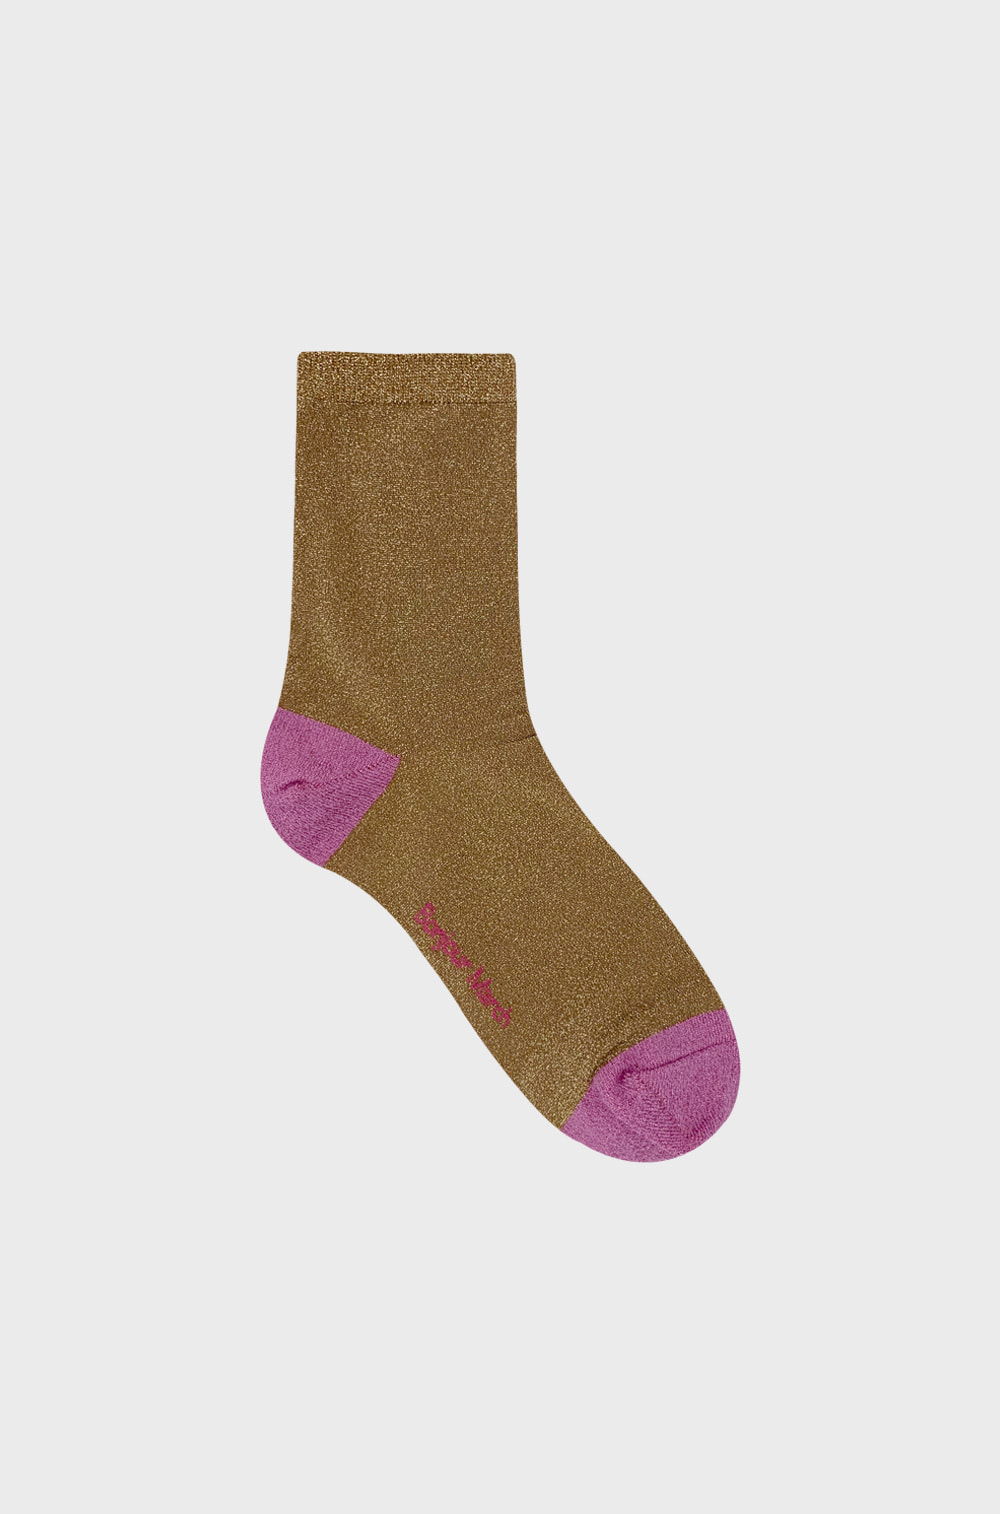 Planet socks